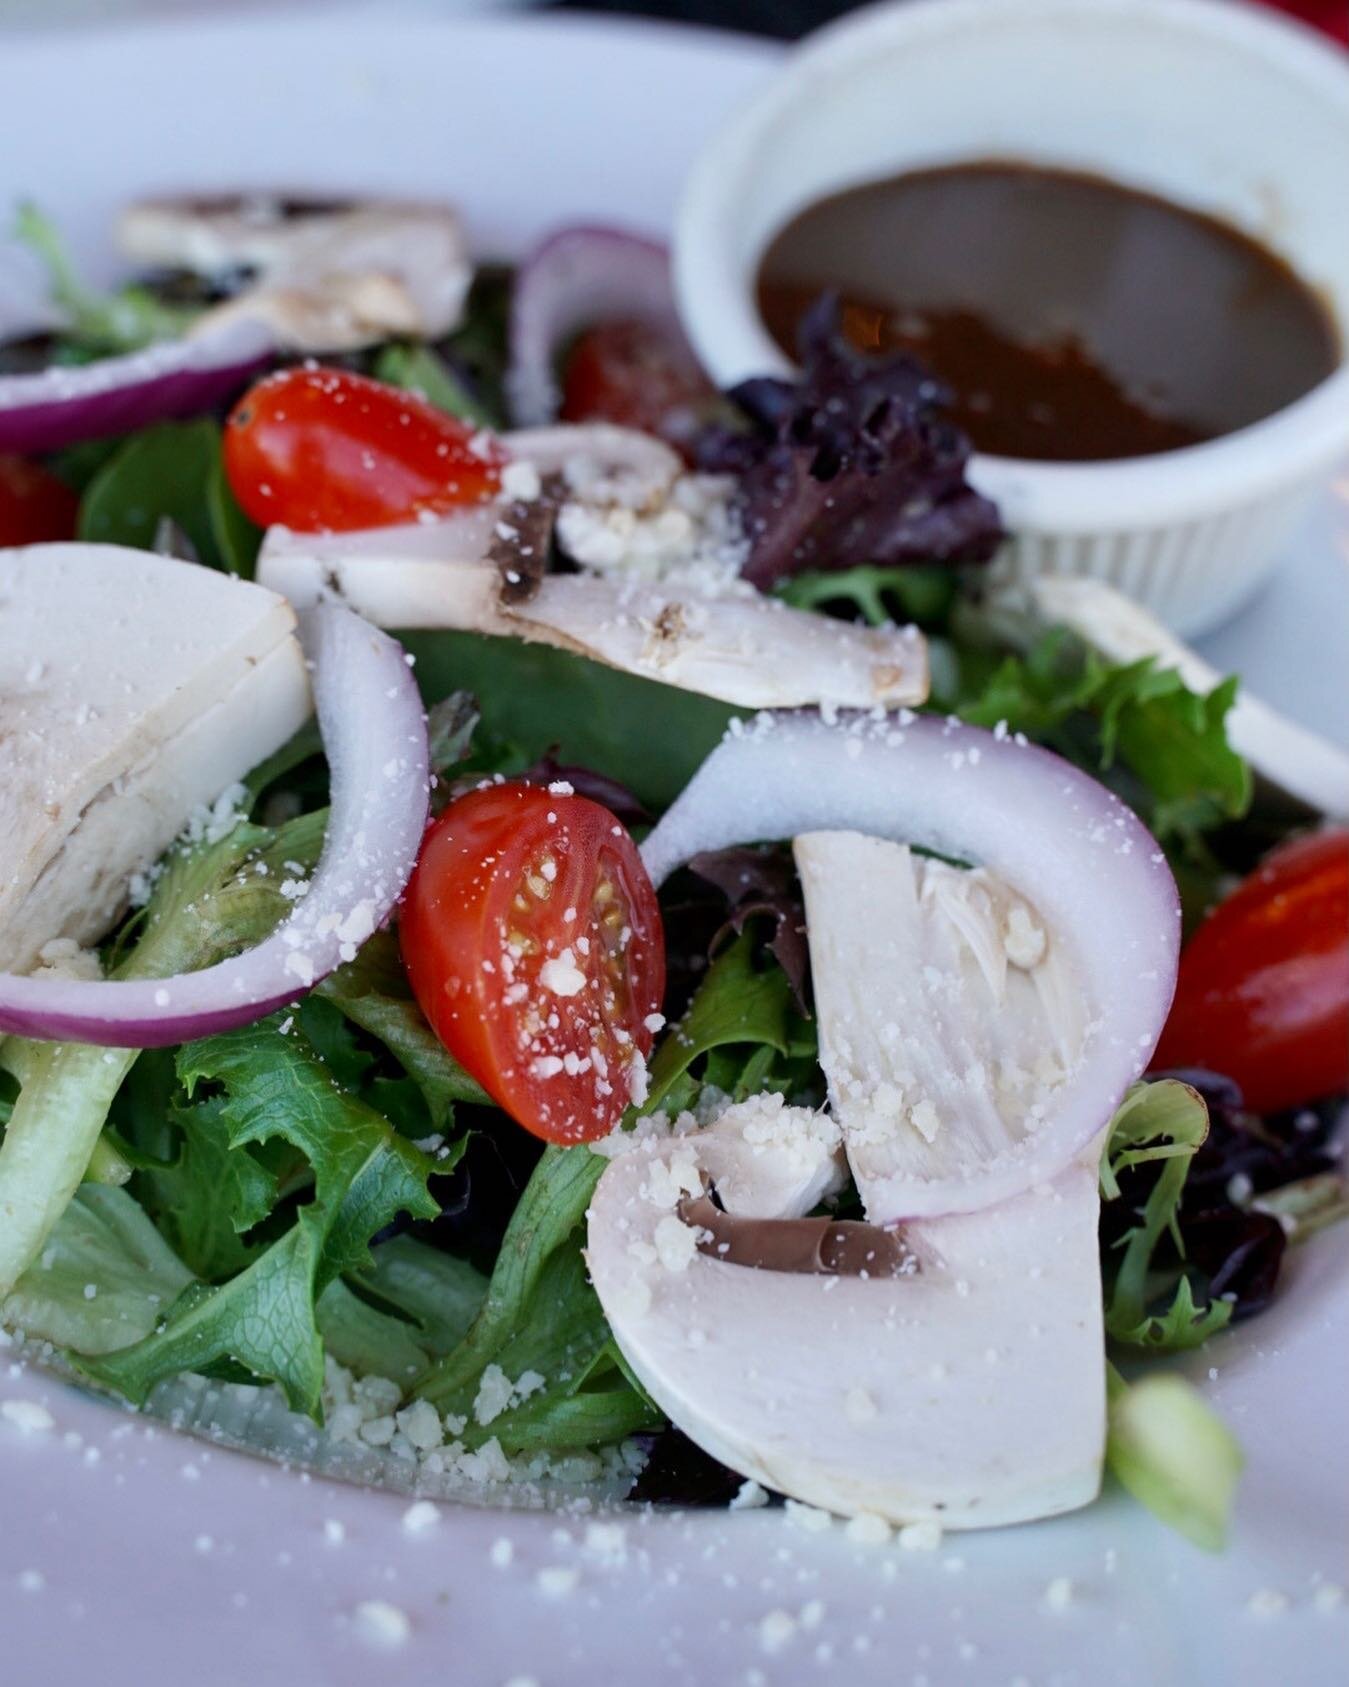 Perfect way to start your meal🥗 Which do you prefer, house or Caesar salad? 
.
.
.
.
.
.
.
#zolositalian #zolositalianrestaurant #housesalad #freshsalad #franklintn #franklinfoodie #franklineats #italianfood #italiancuisine #bestitalianfood #nashvil